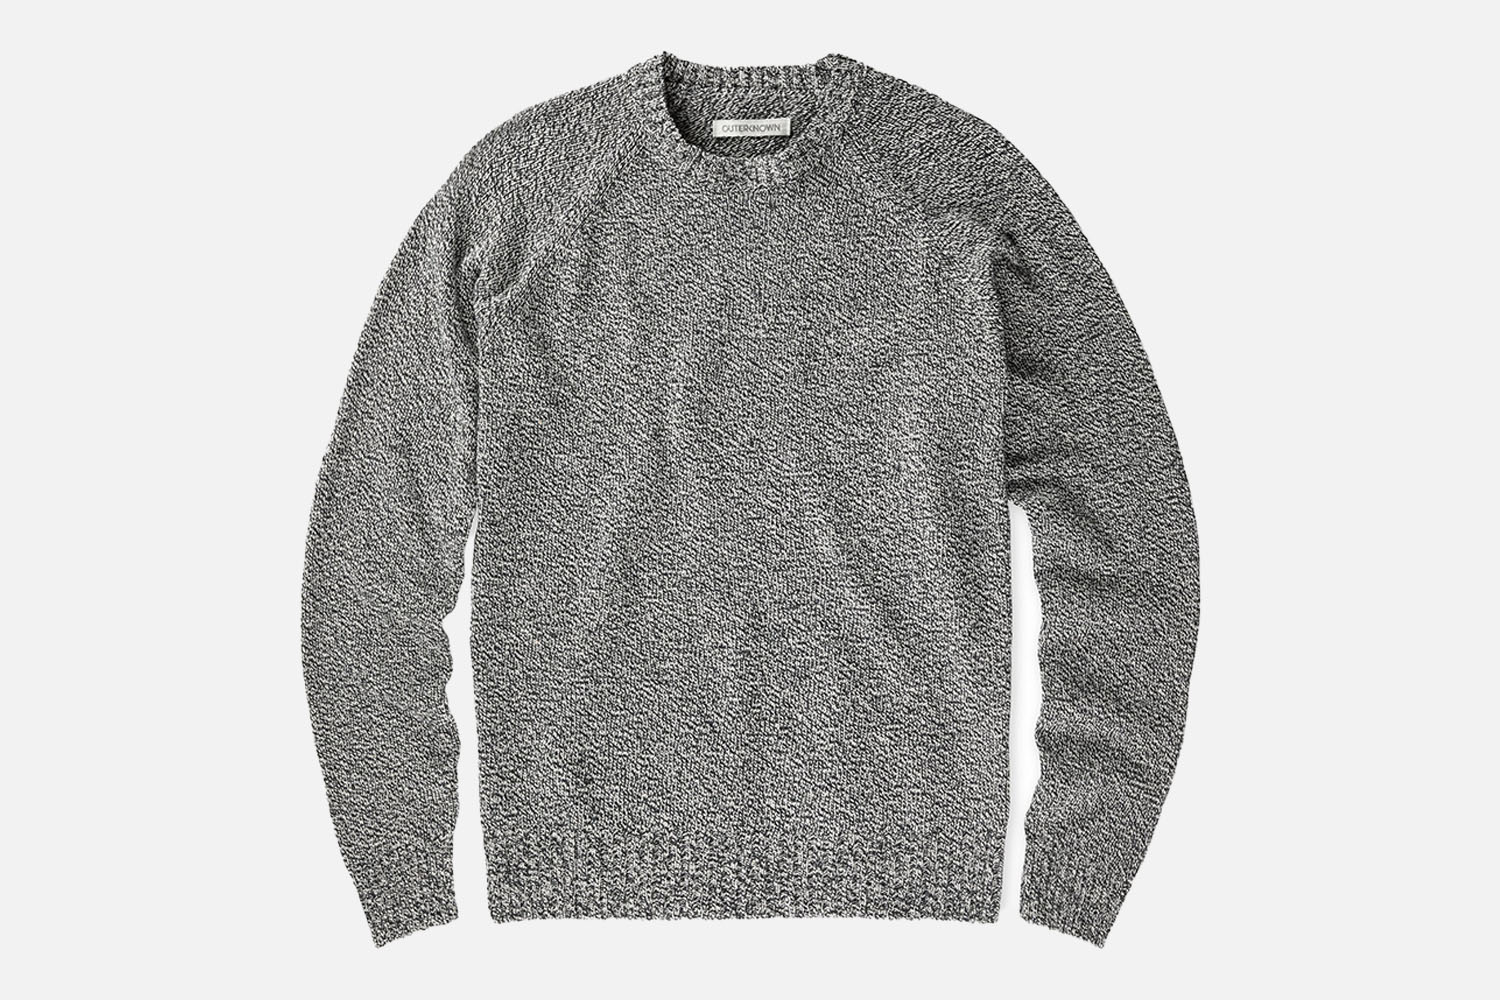 Outerknown Hemisphere Sweater